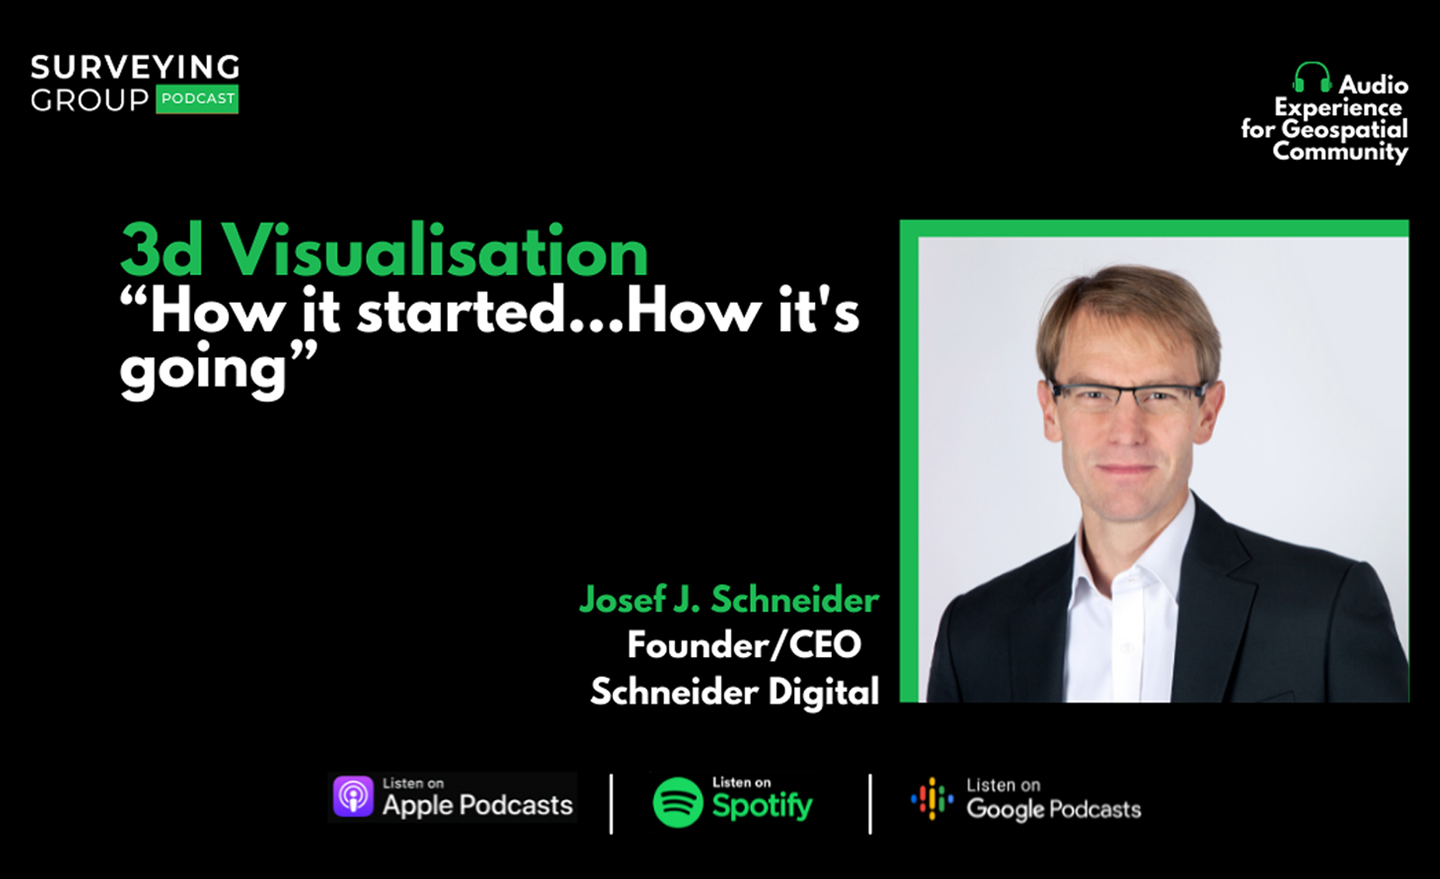 Podcast with Josef Schneider on gesospatial community plattform of SURVEYING GROUP